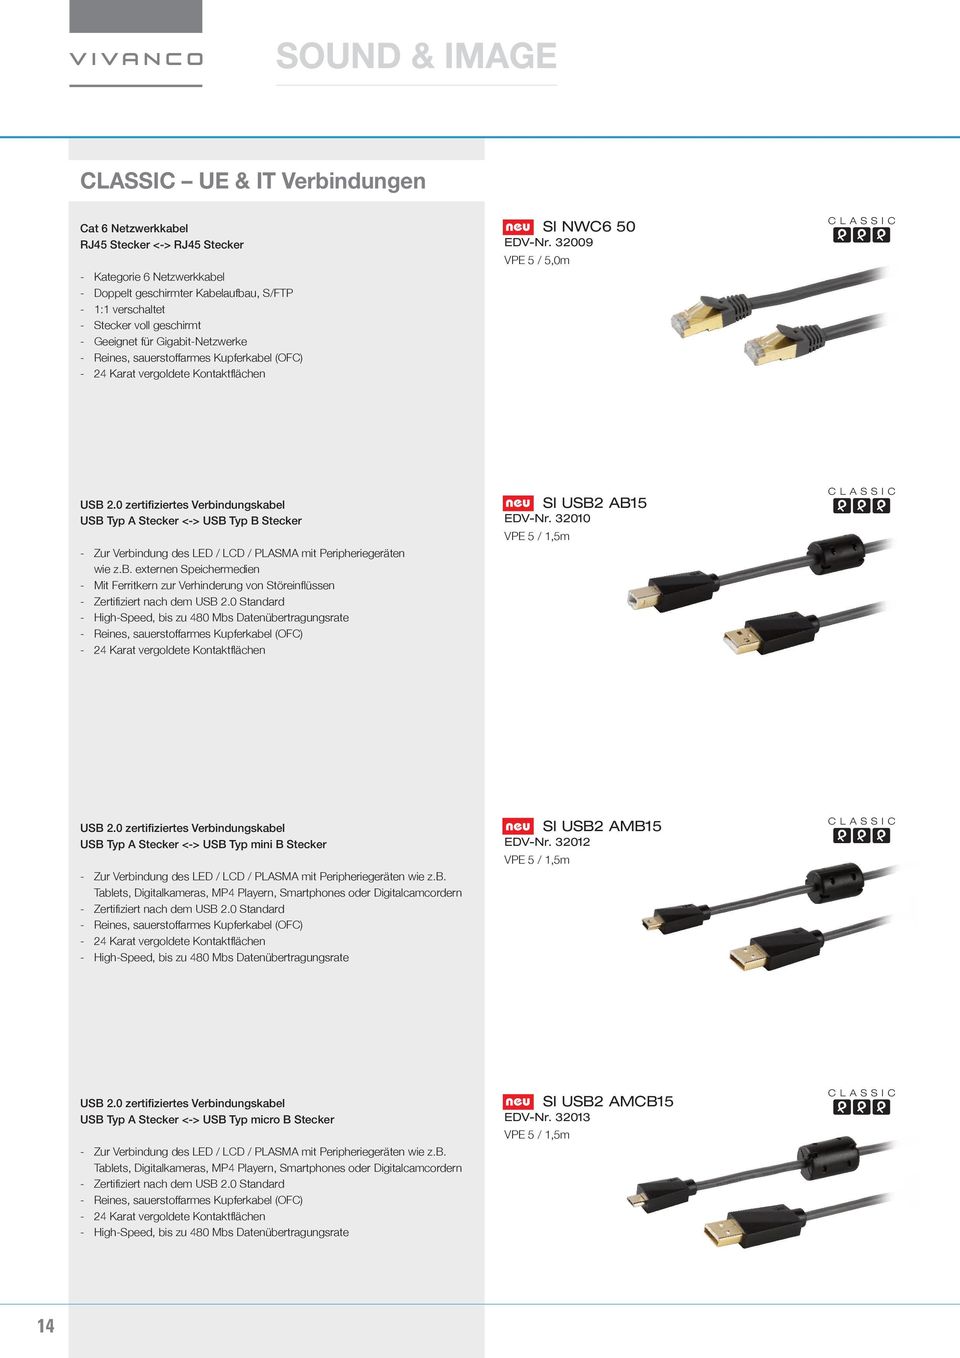 0 Standard - High-Speed, bis zu 480 Mbs Datenübertragungsrate SI USB2 B5 EDV-Nr. 3200 USB 2.